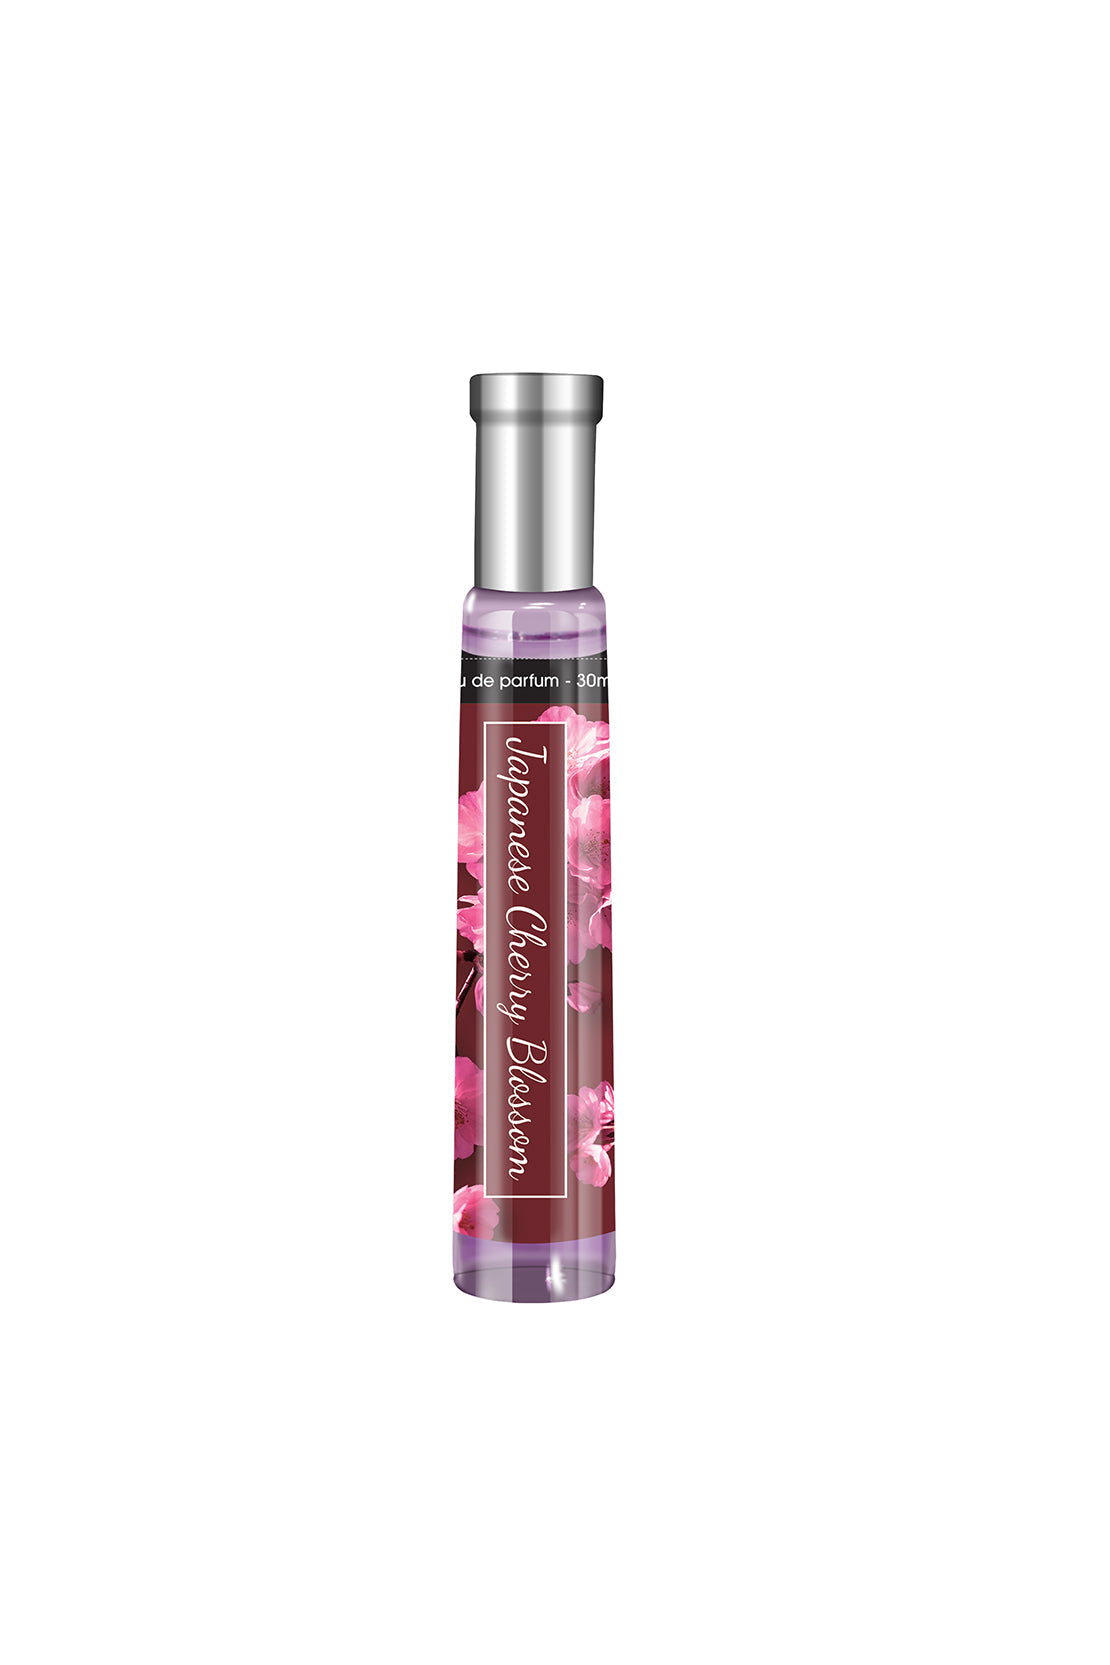 Rivaj UK Japanese Cherry Blossom Perfume (30ml)